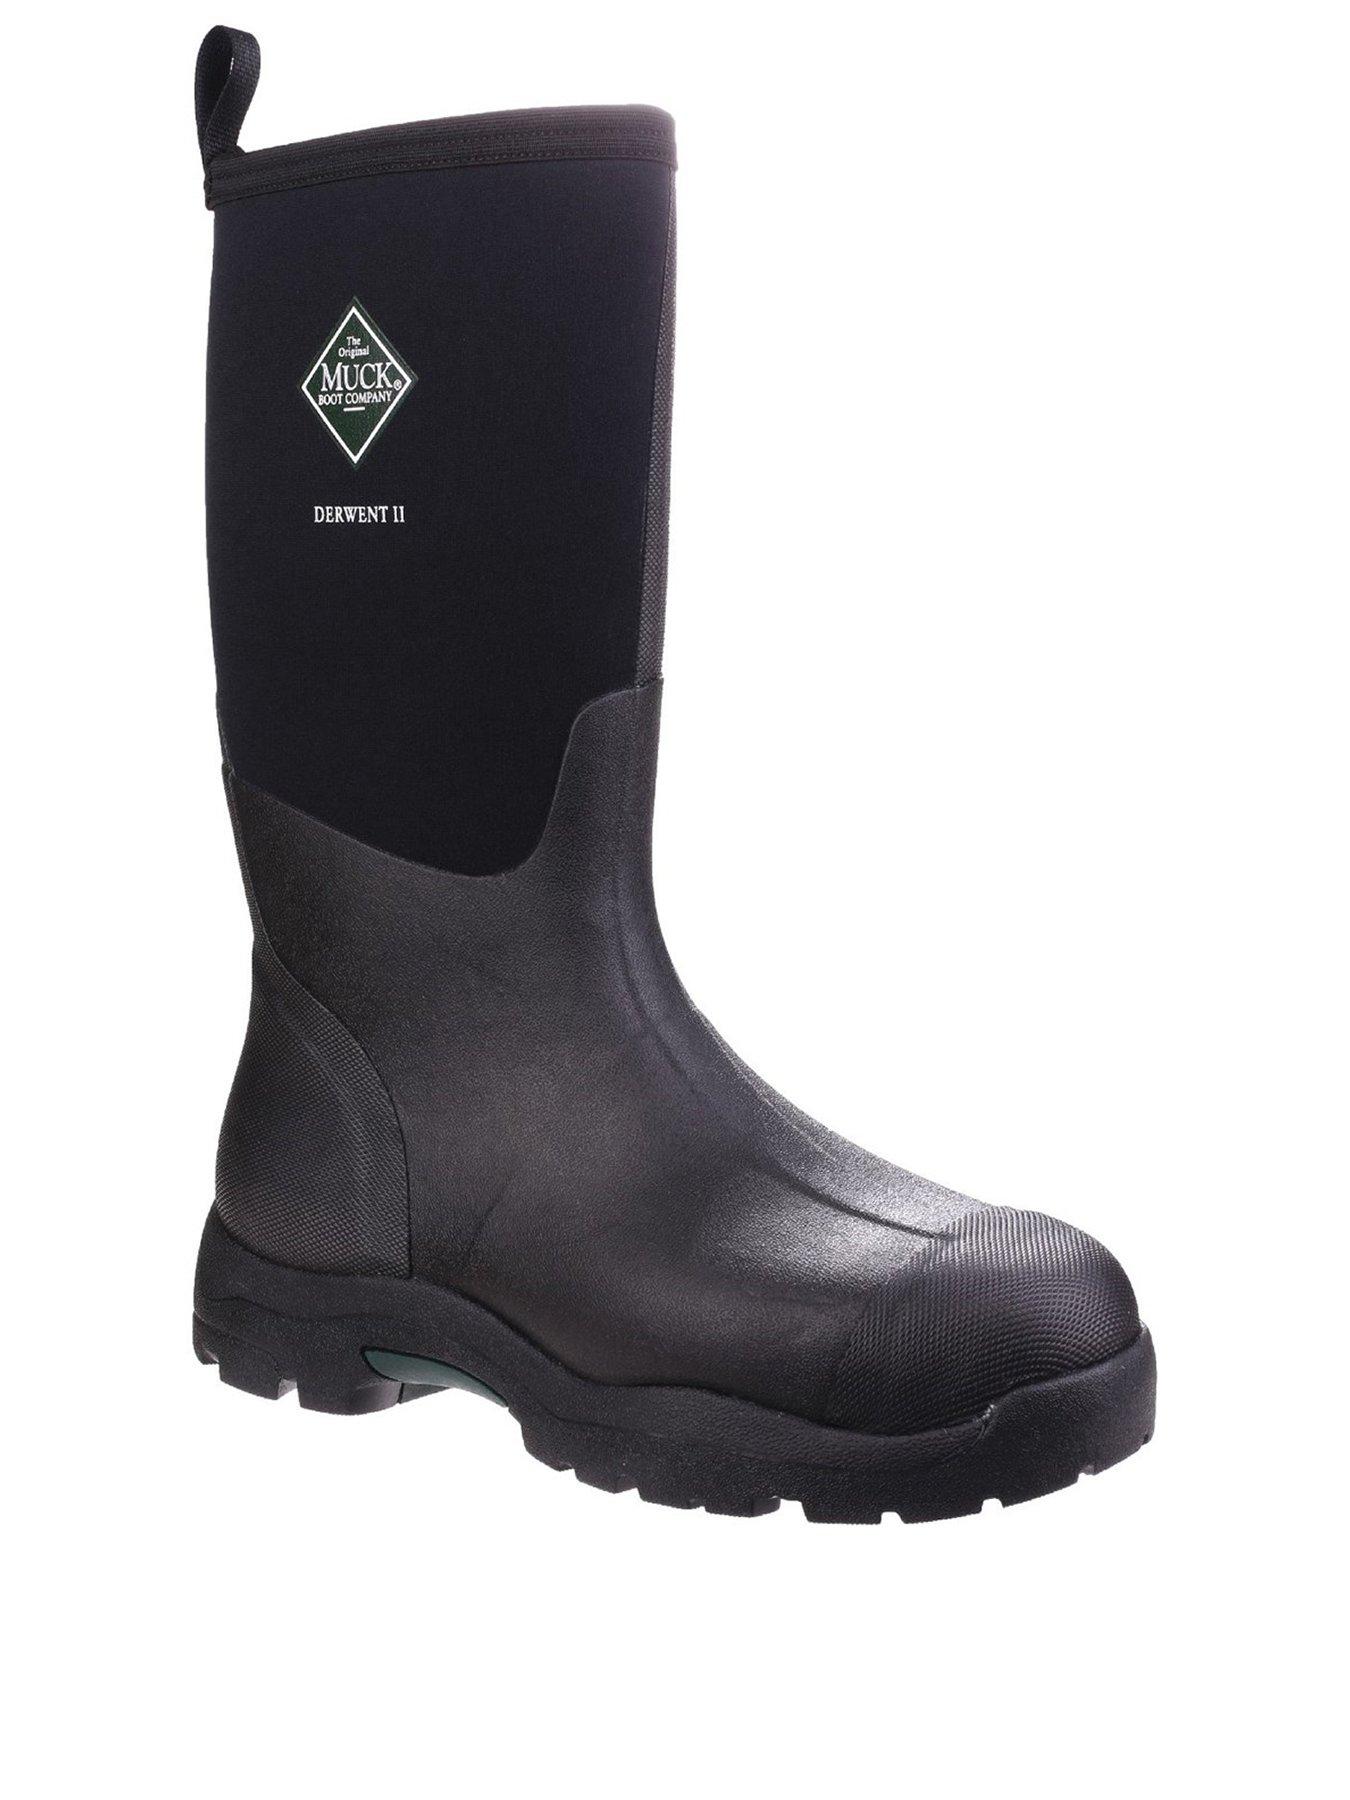 Muck Boots Derwent II Welly - Black | very.co.uk